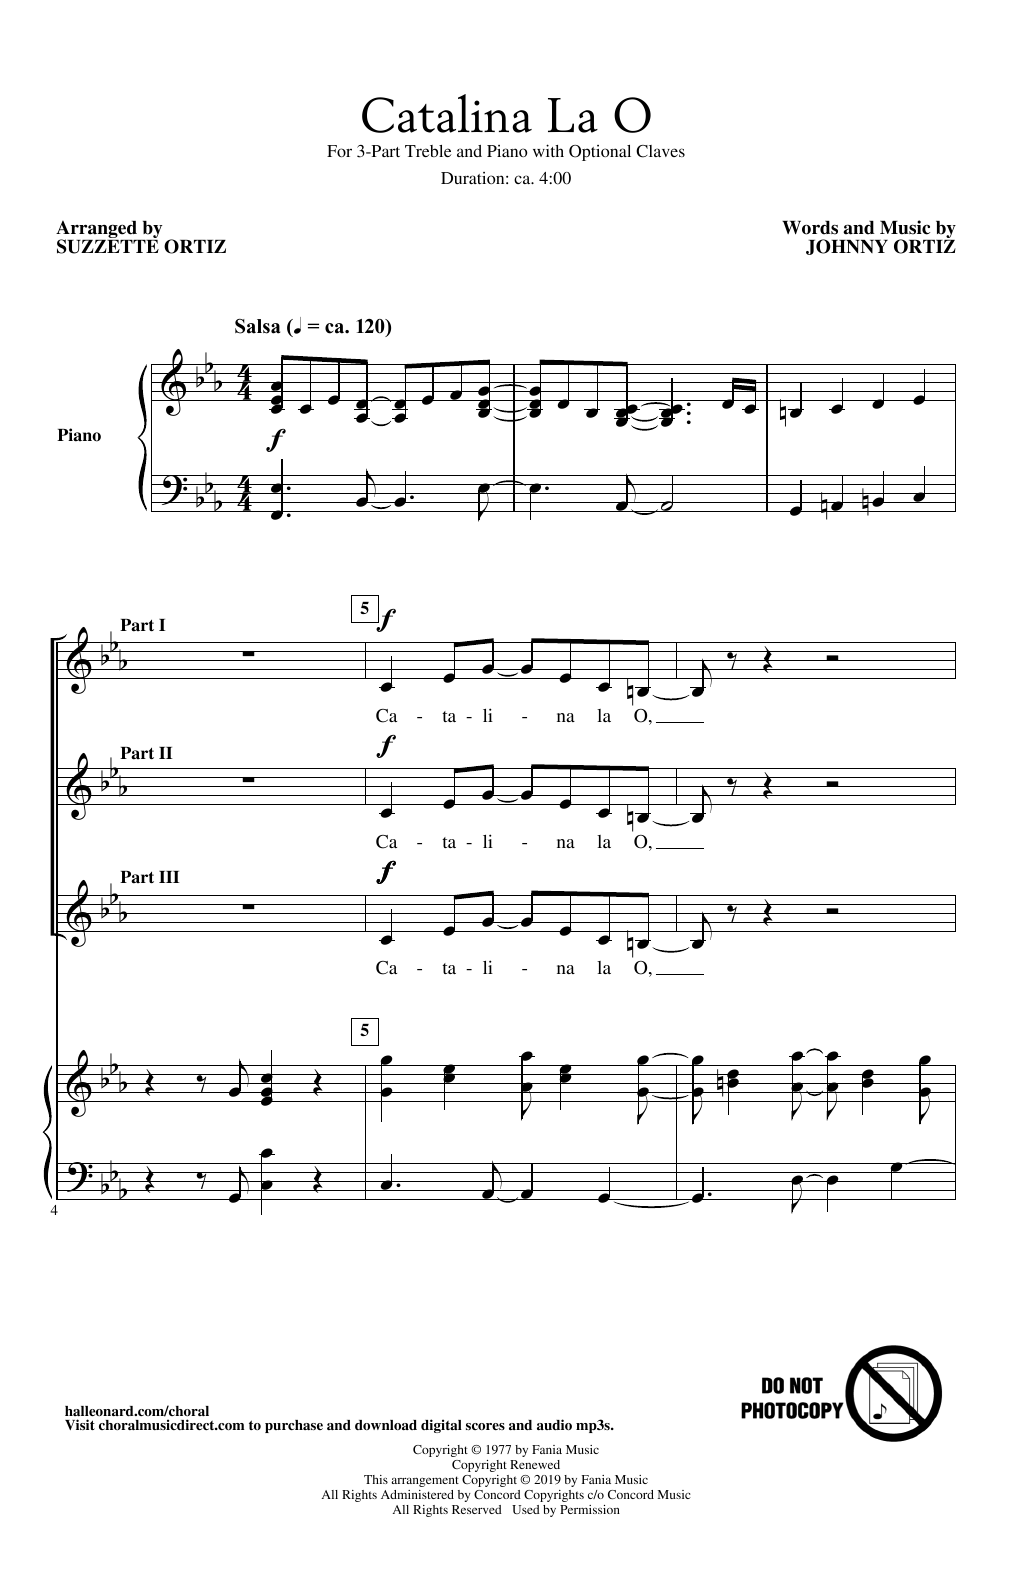 Johnny Ortiz Catalina La O (arr. Suzzette Ortiz) Sheet Music Notes & Chords for 3-Part Treble Choir - Download or Print PDF